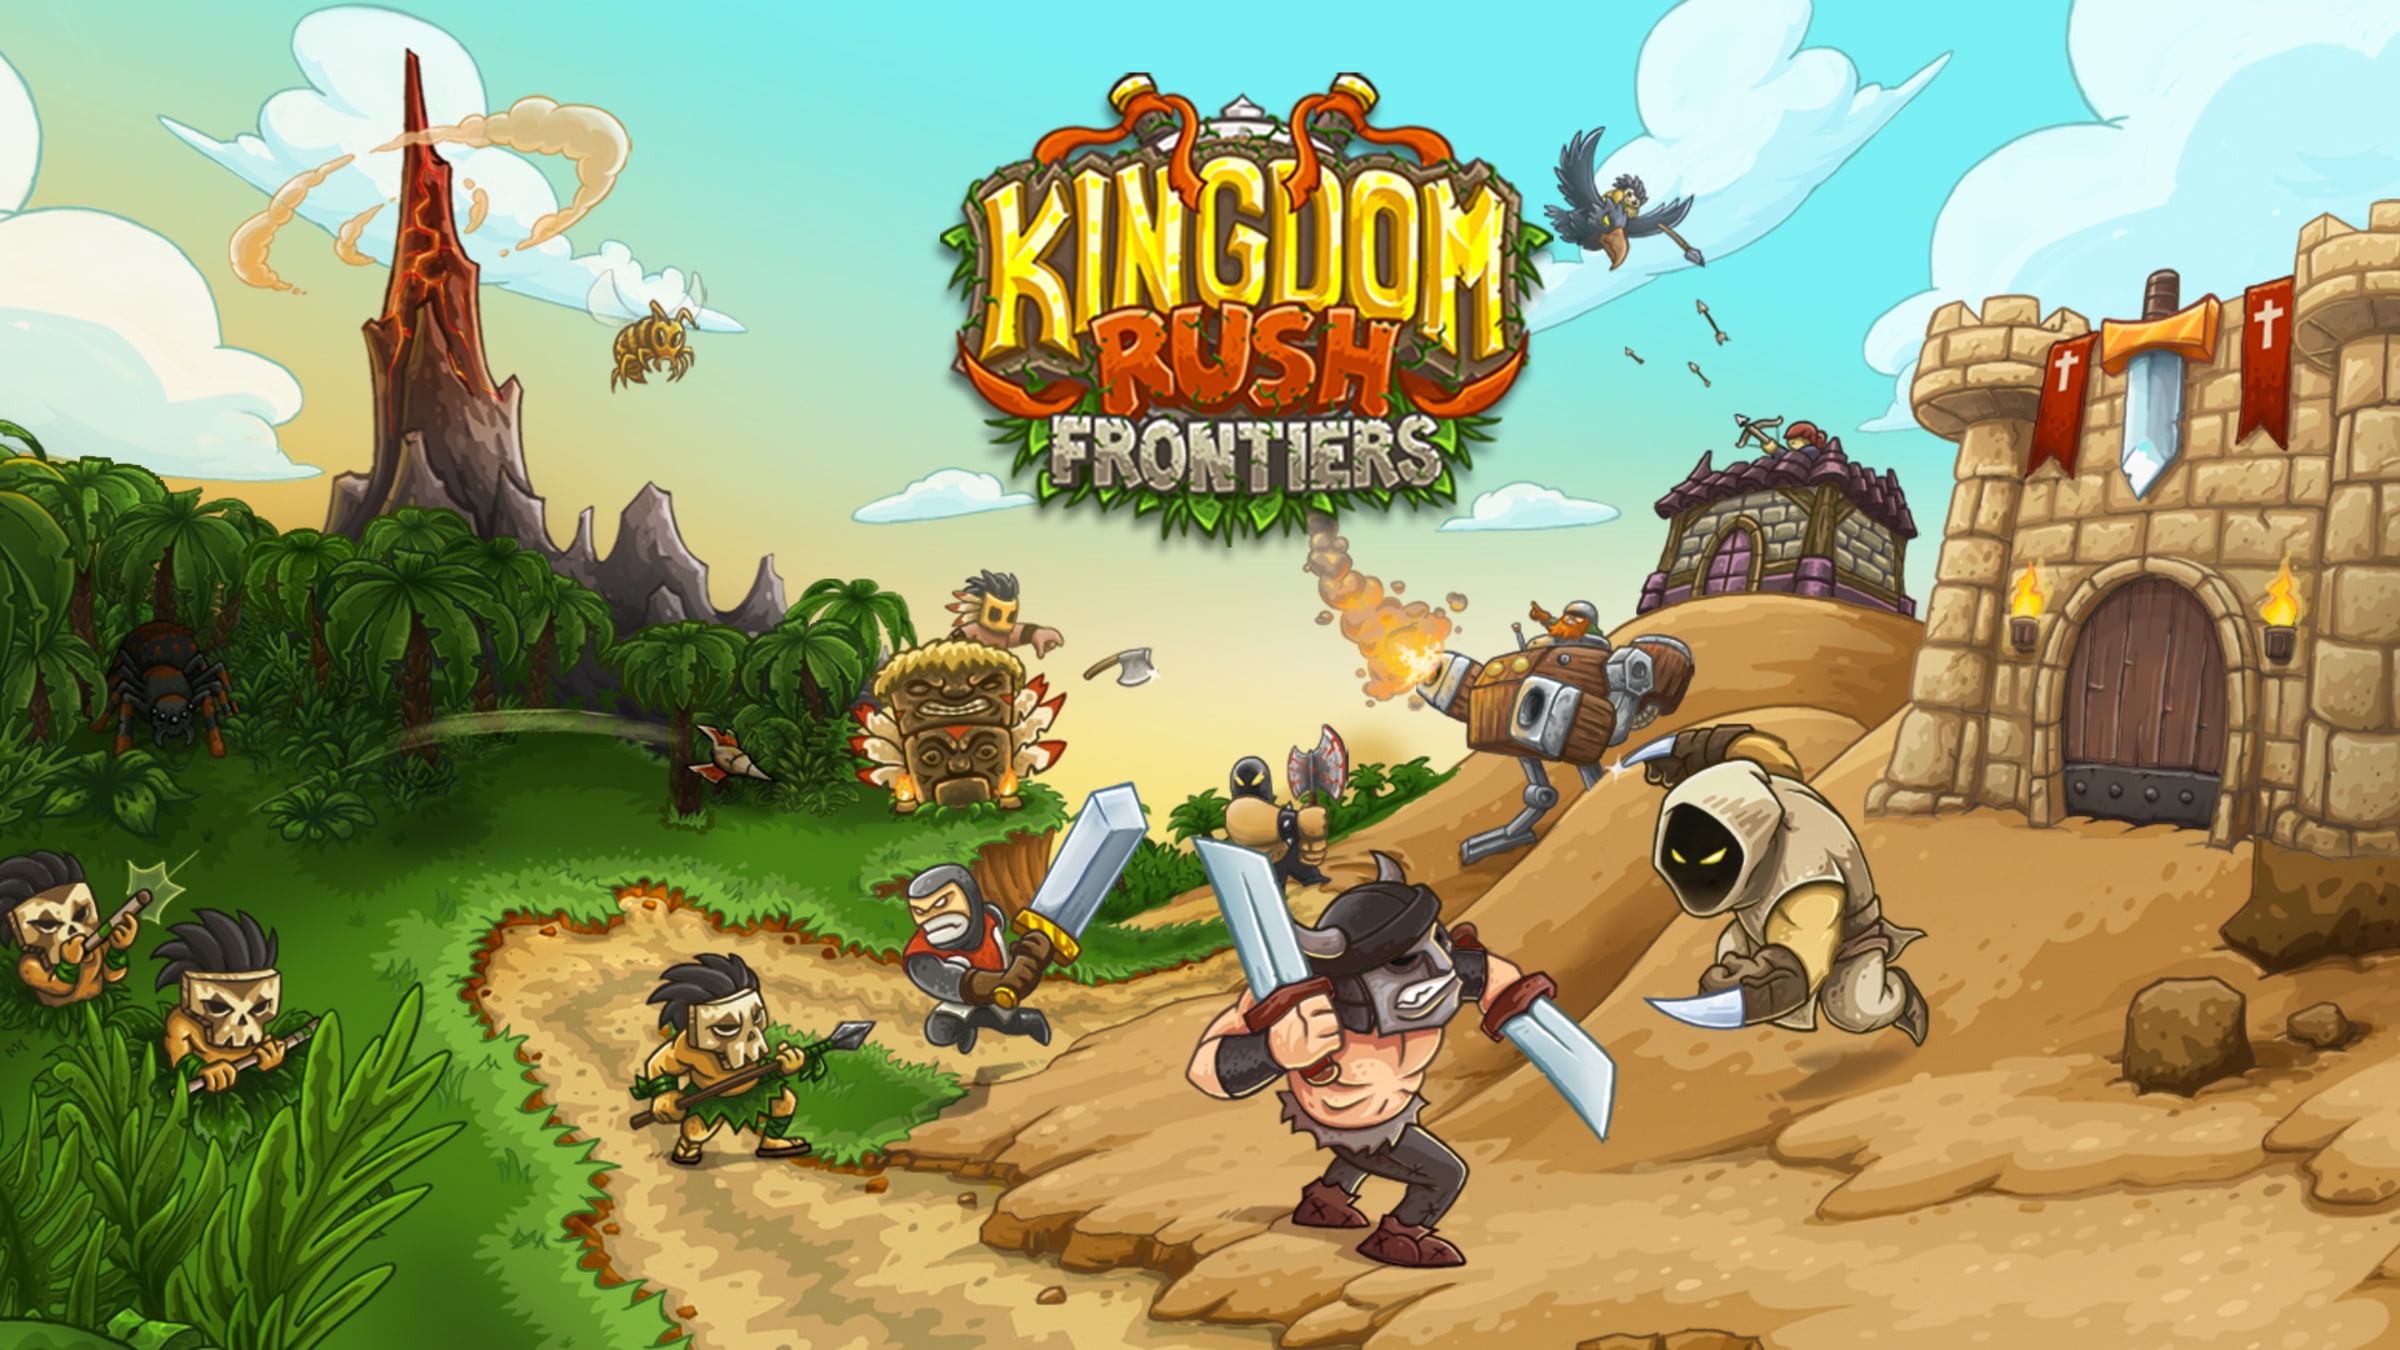 Kingdom Rush Frontiers TD